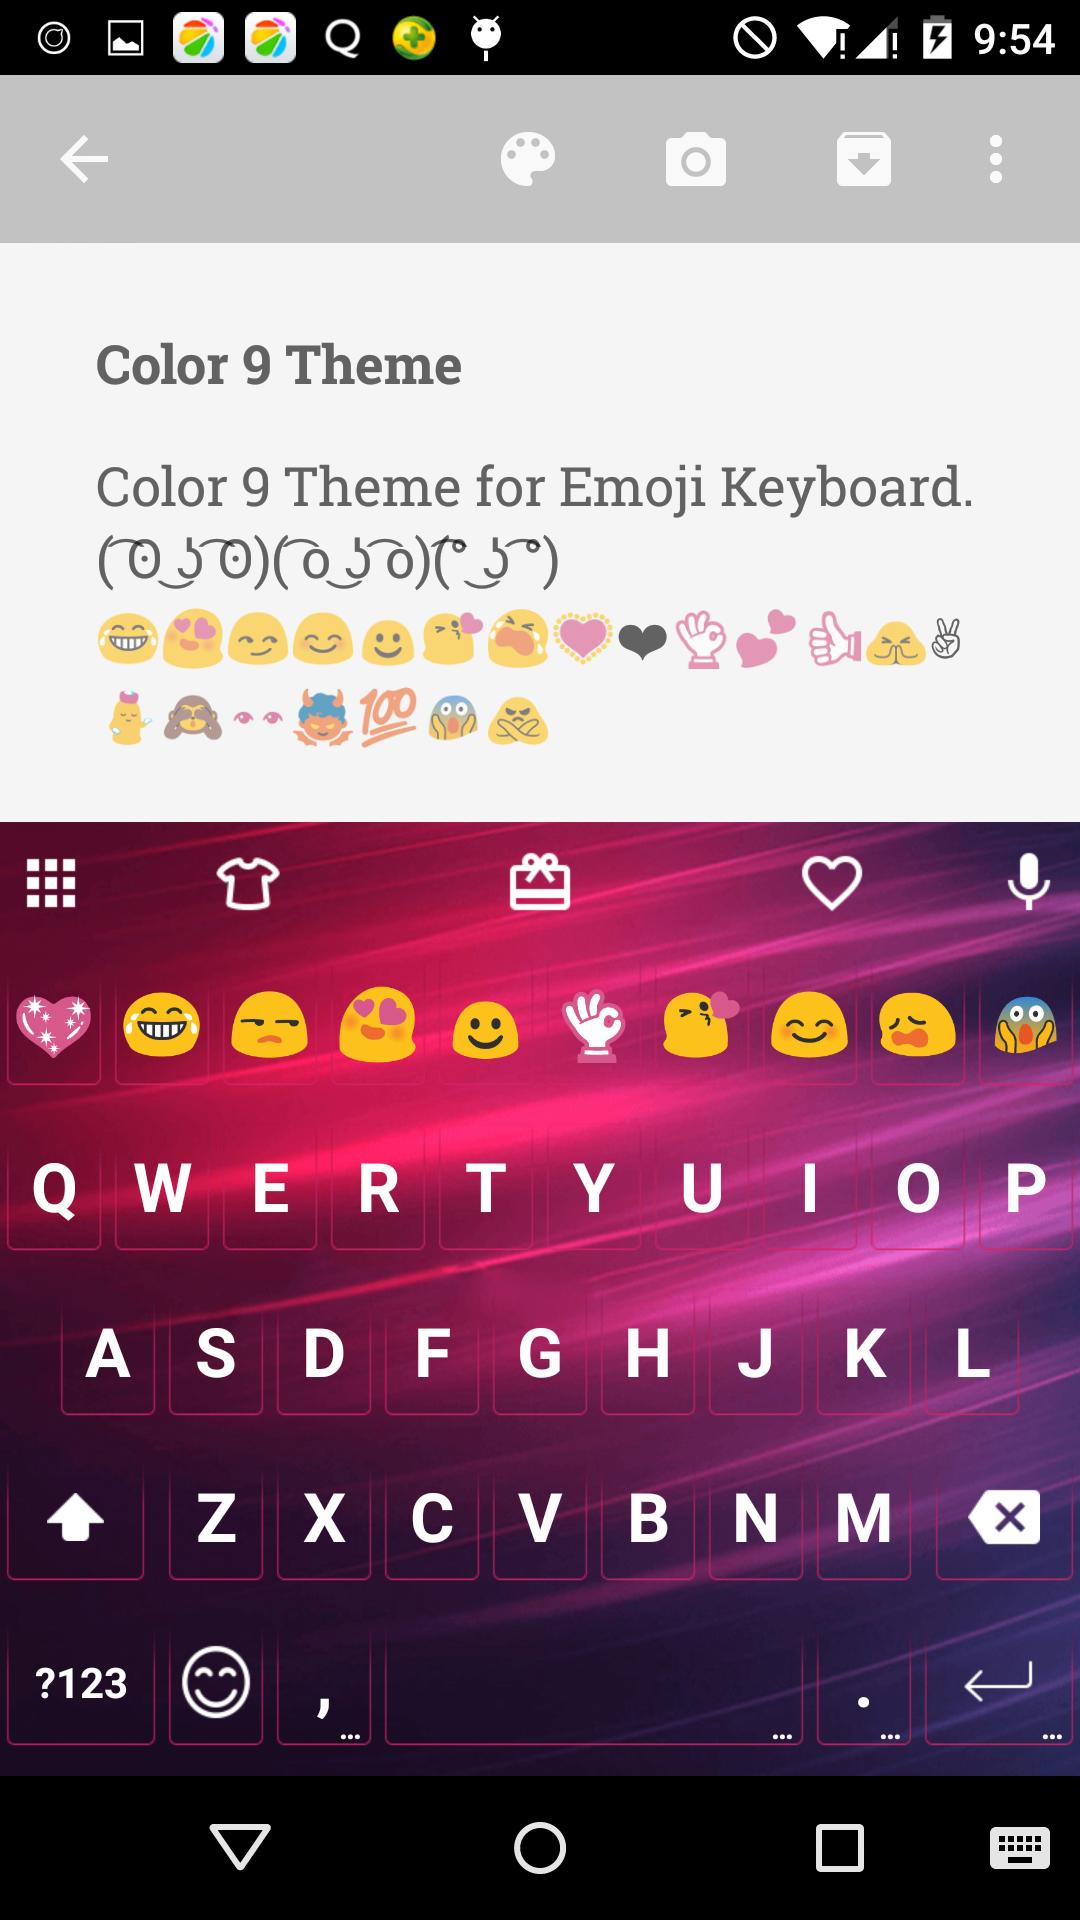 Color 9 Emoji Keyboard for Android - APK Download